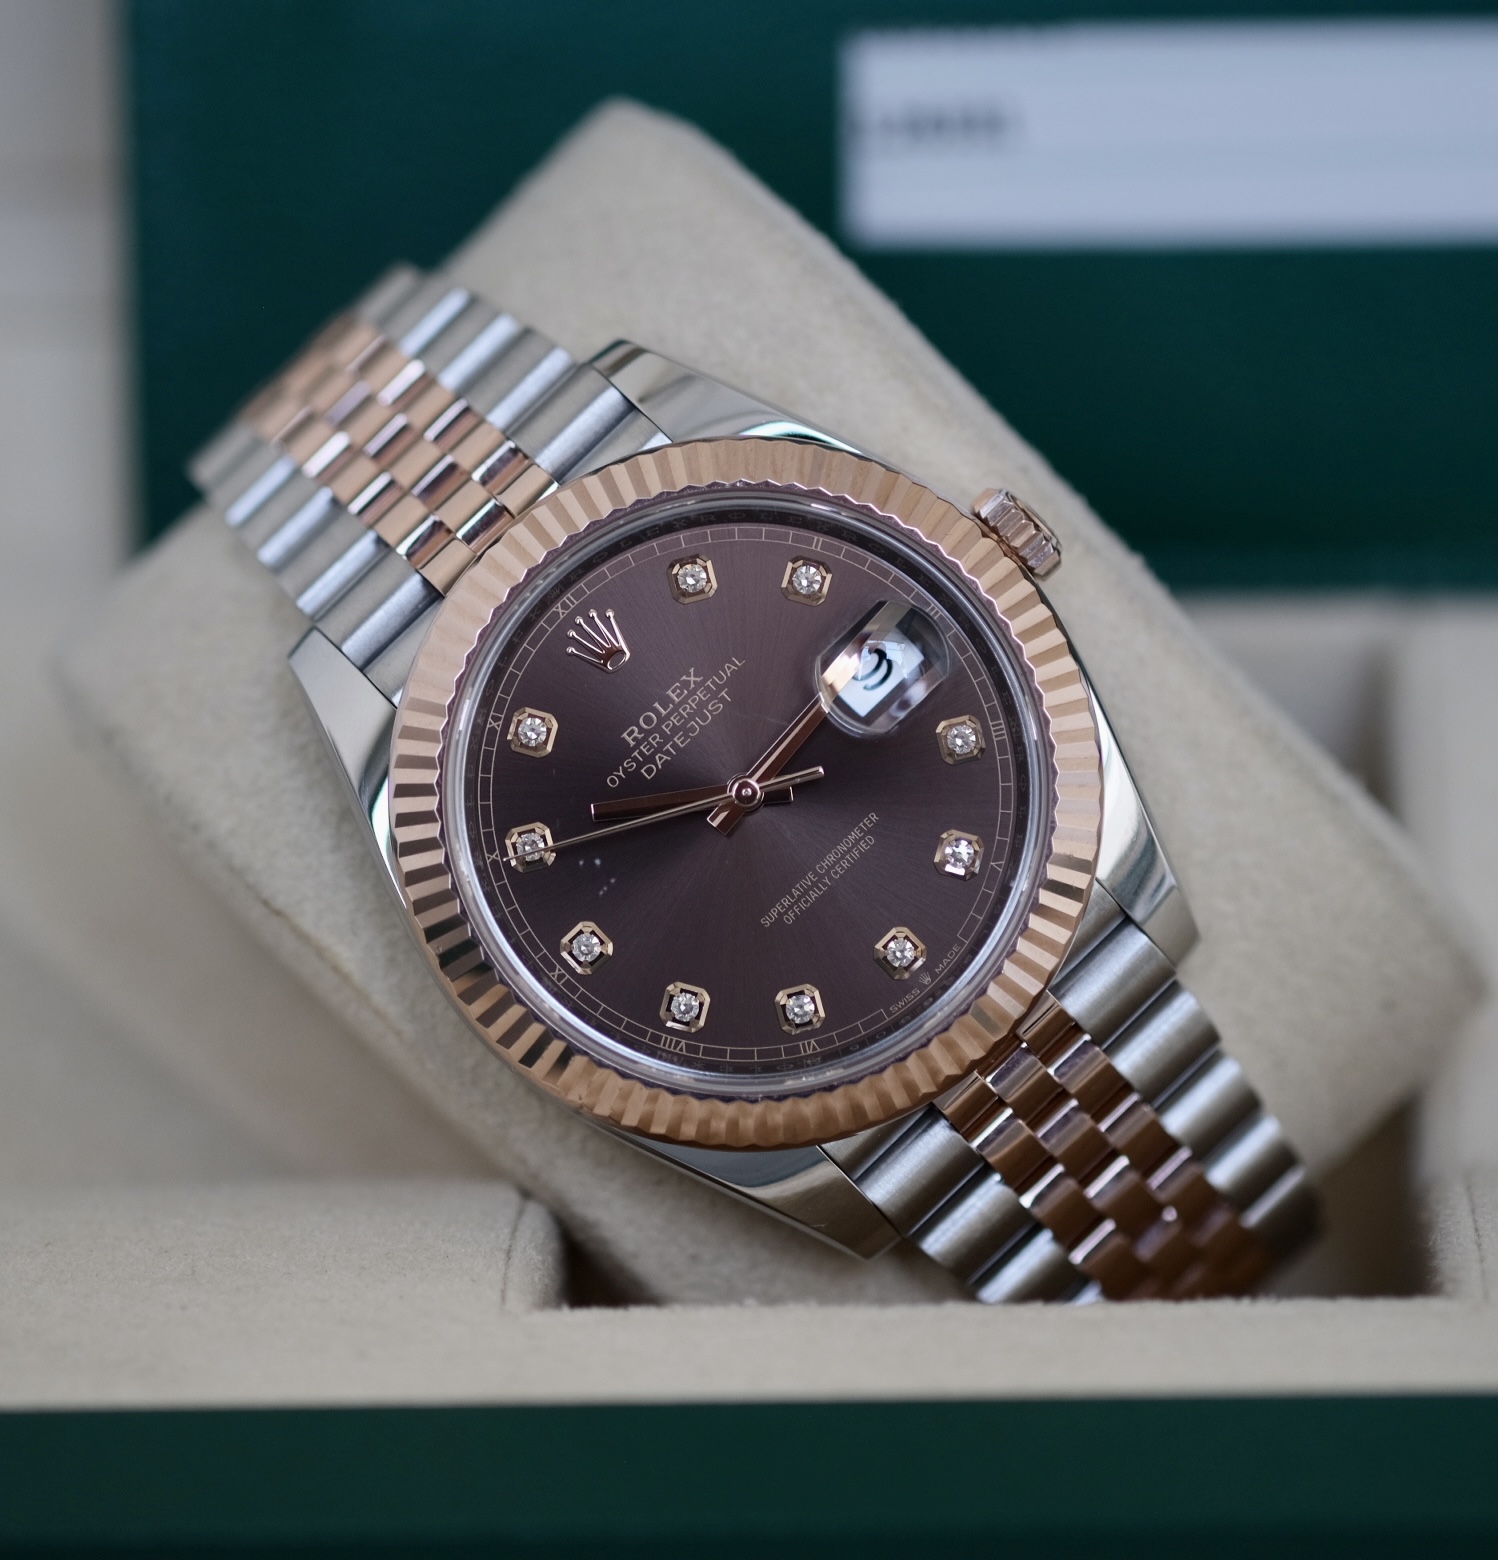 Đồng hồ Rolex 126331 mặt Chocolate cọc số kim cương size 41mm